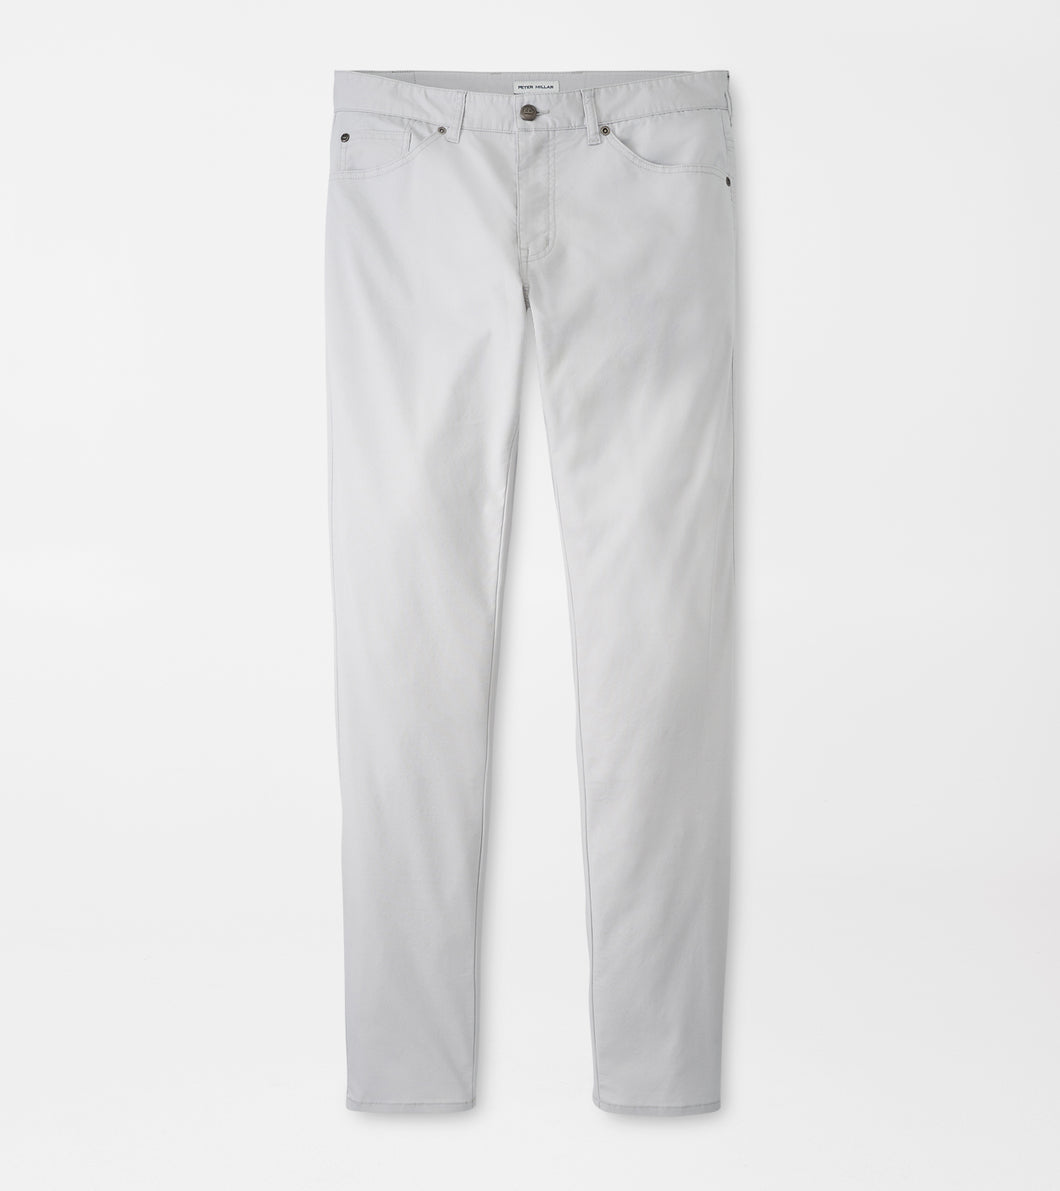 Peter Millar Crown Comfort Five-Pocket Pant in British Grey